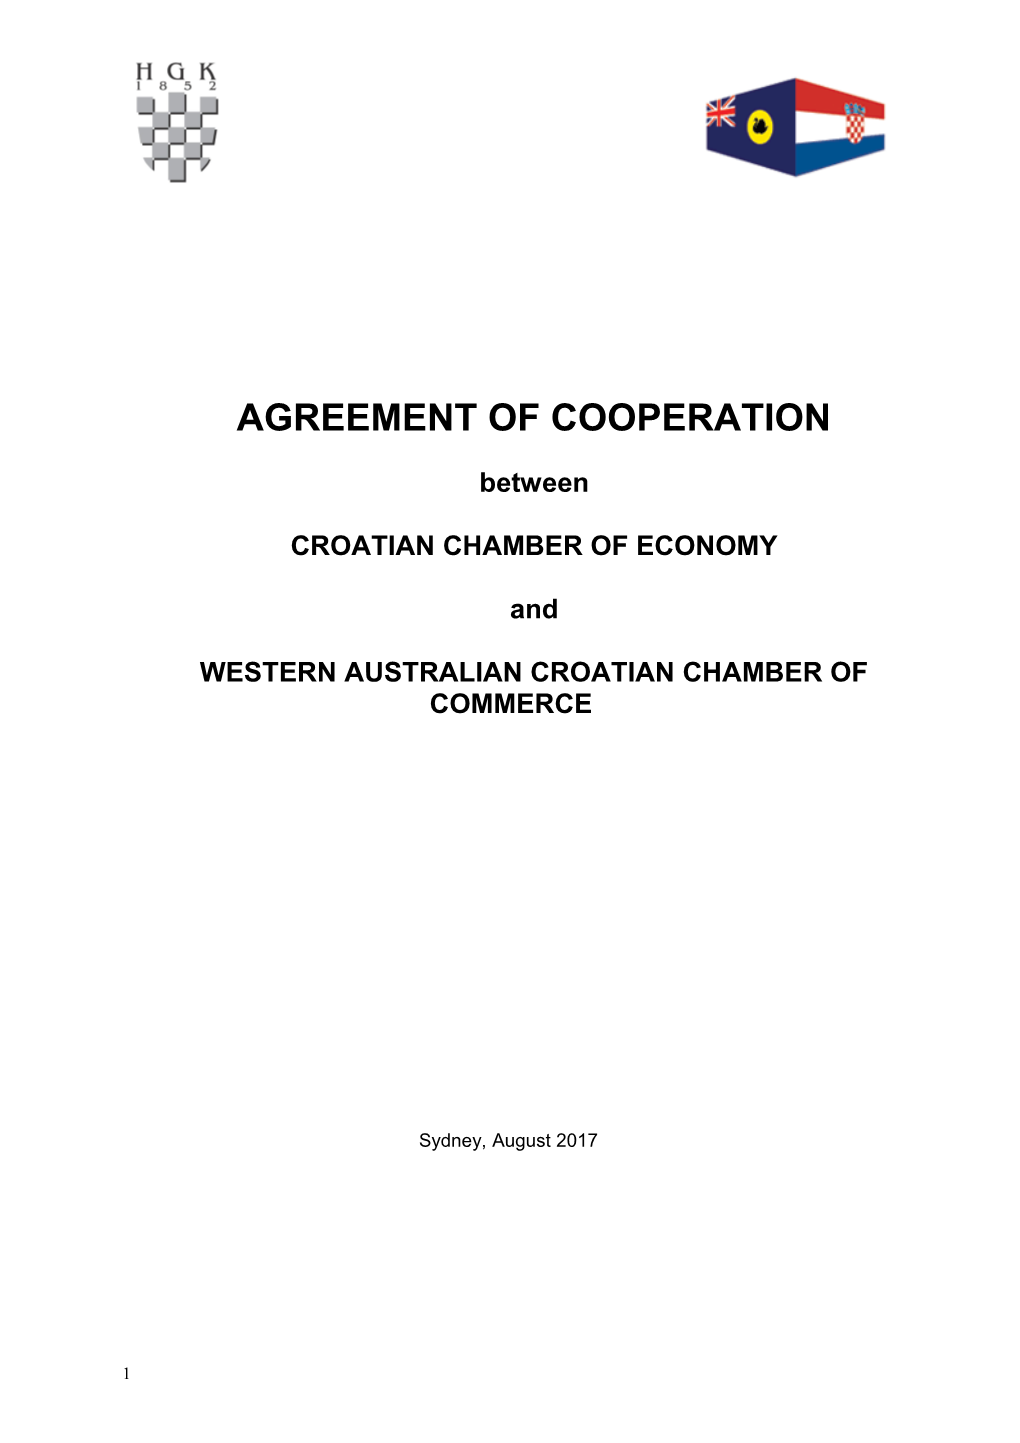 Western Australian Croatian Chamber of Commerce